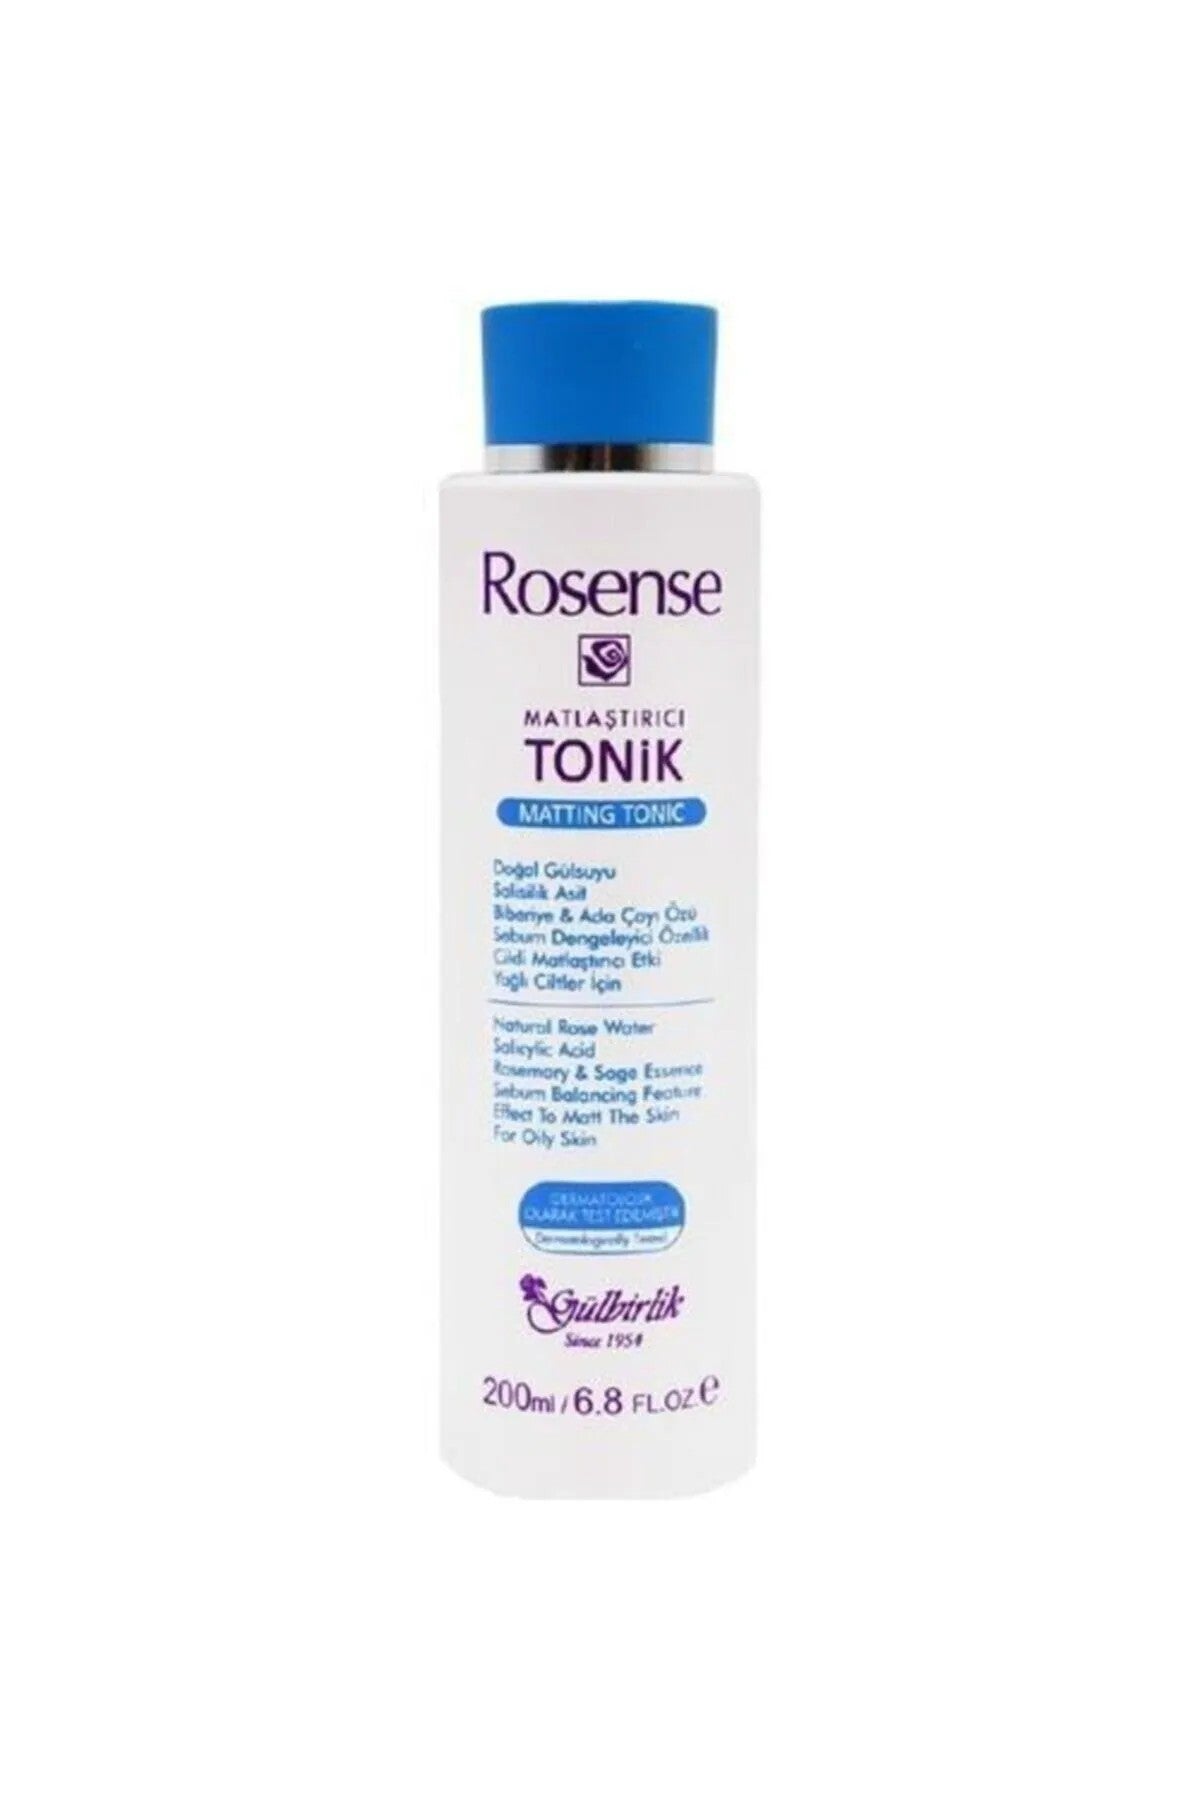 Rosense Tonic Mattifying 200 ml